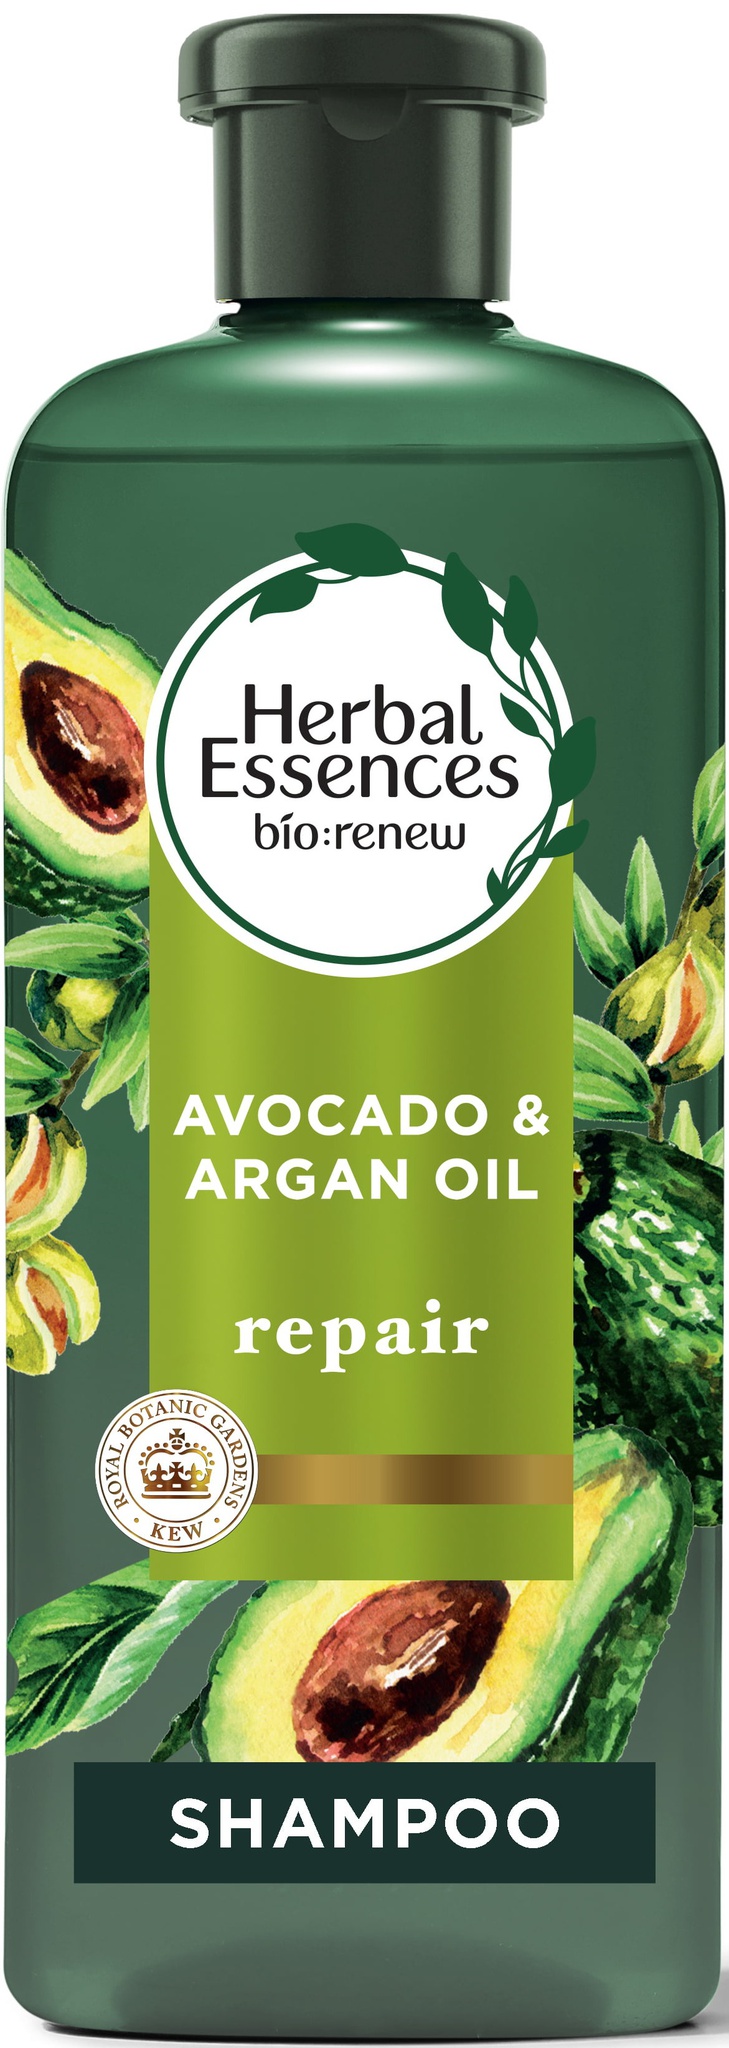 Herbal Essences Avocado & Argan Oil Sulfate Free Shampoo